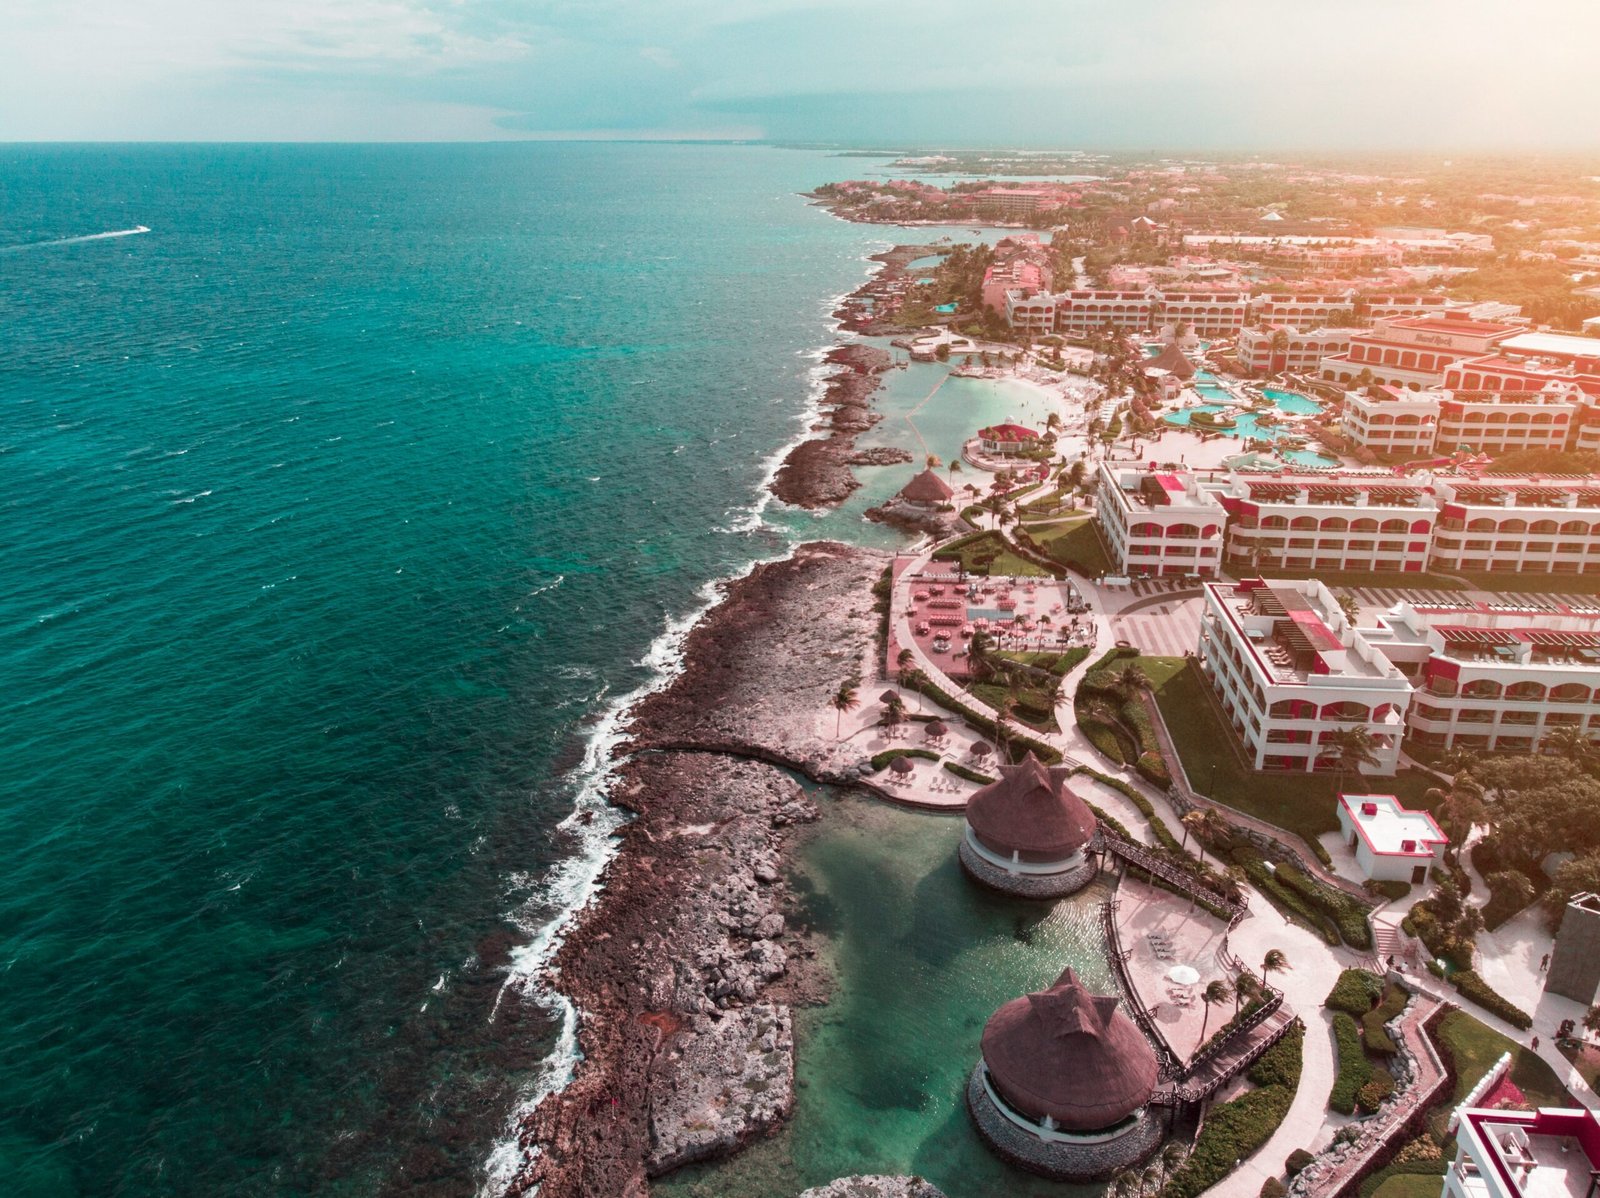 aerial view of hotels and resort facing ocean